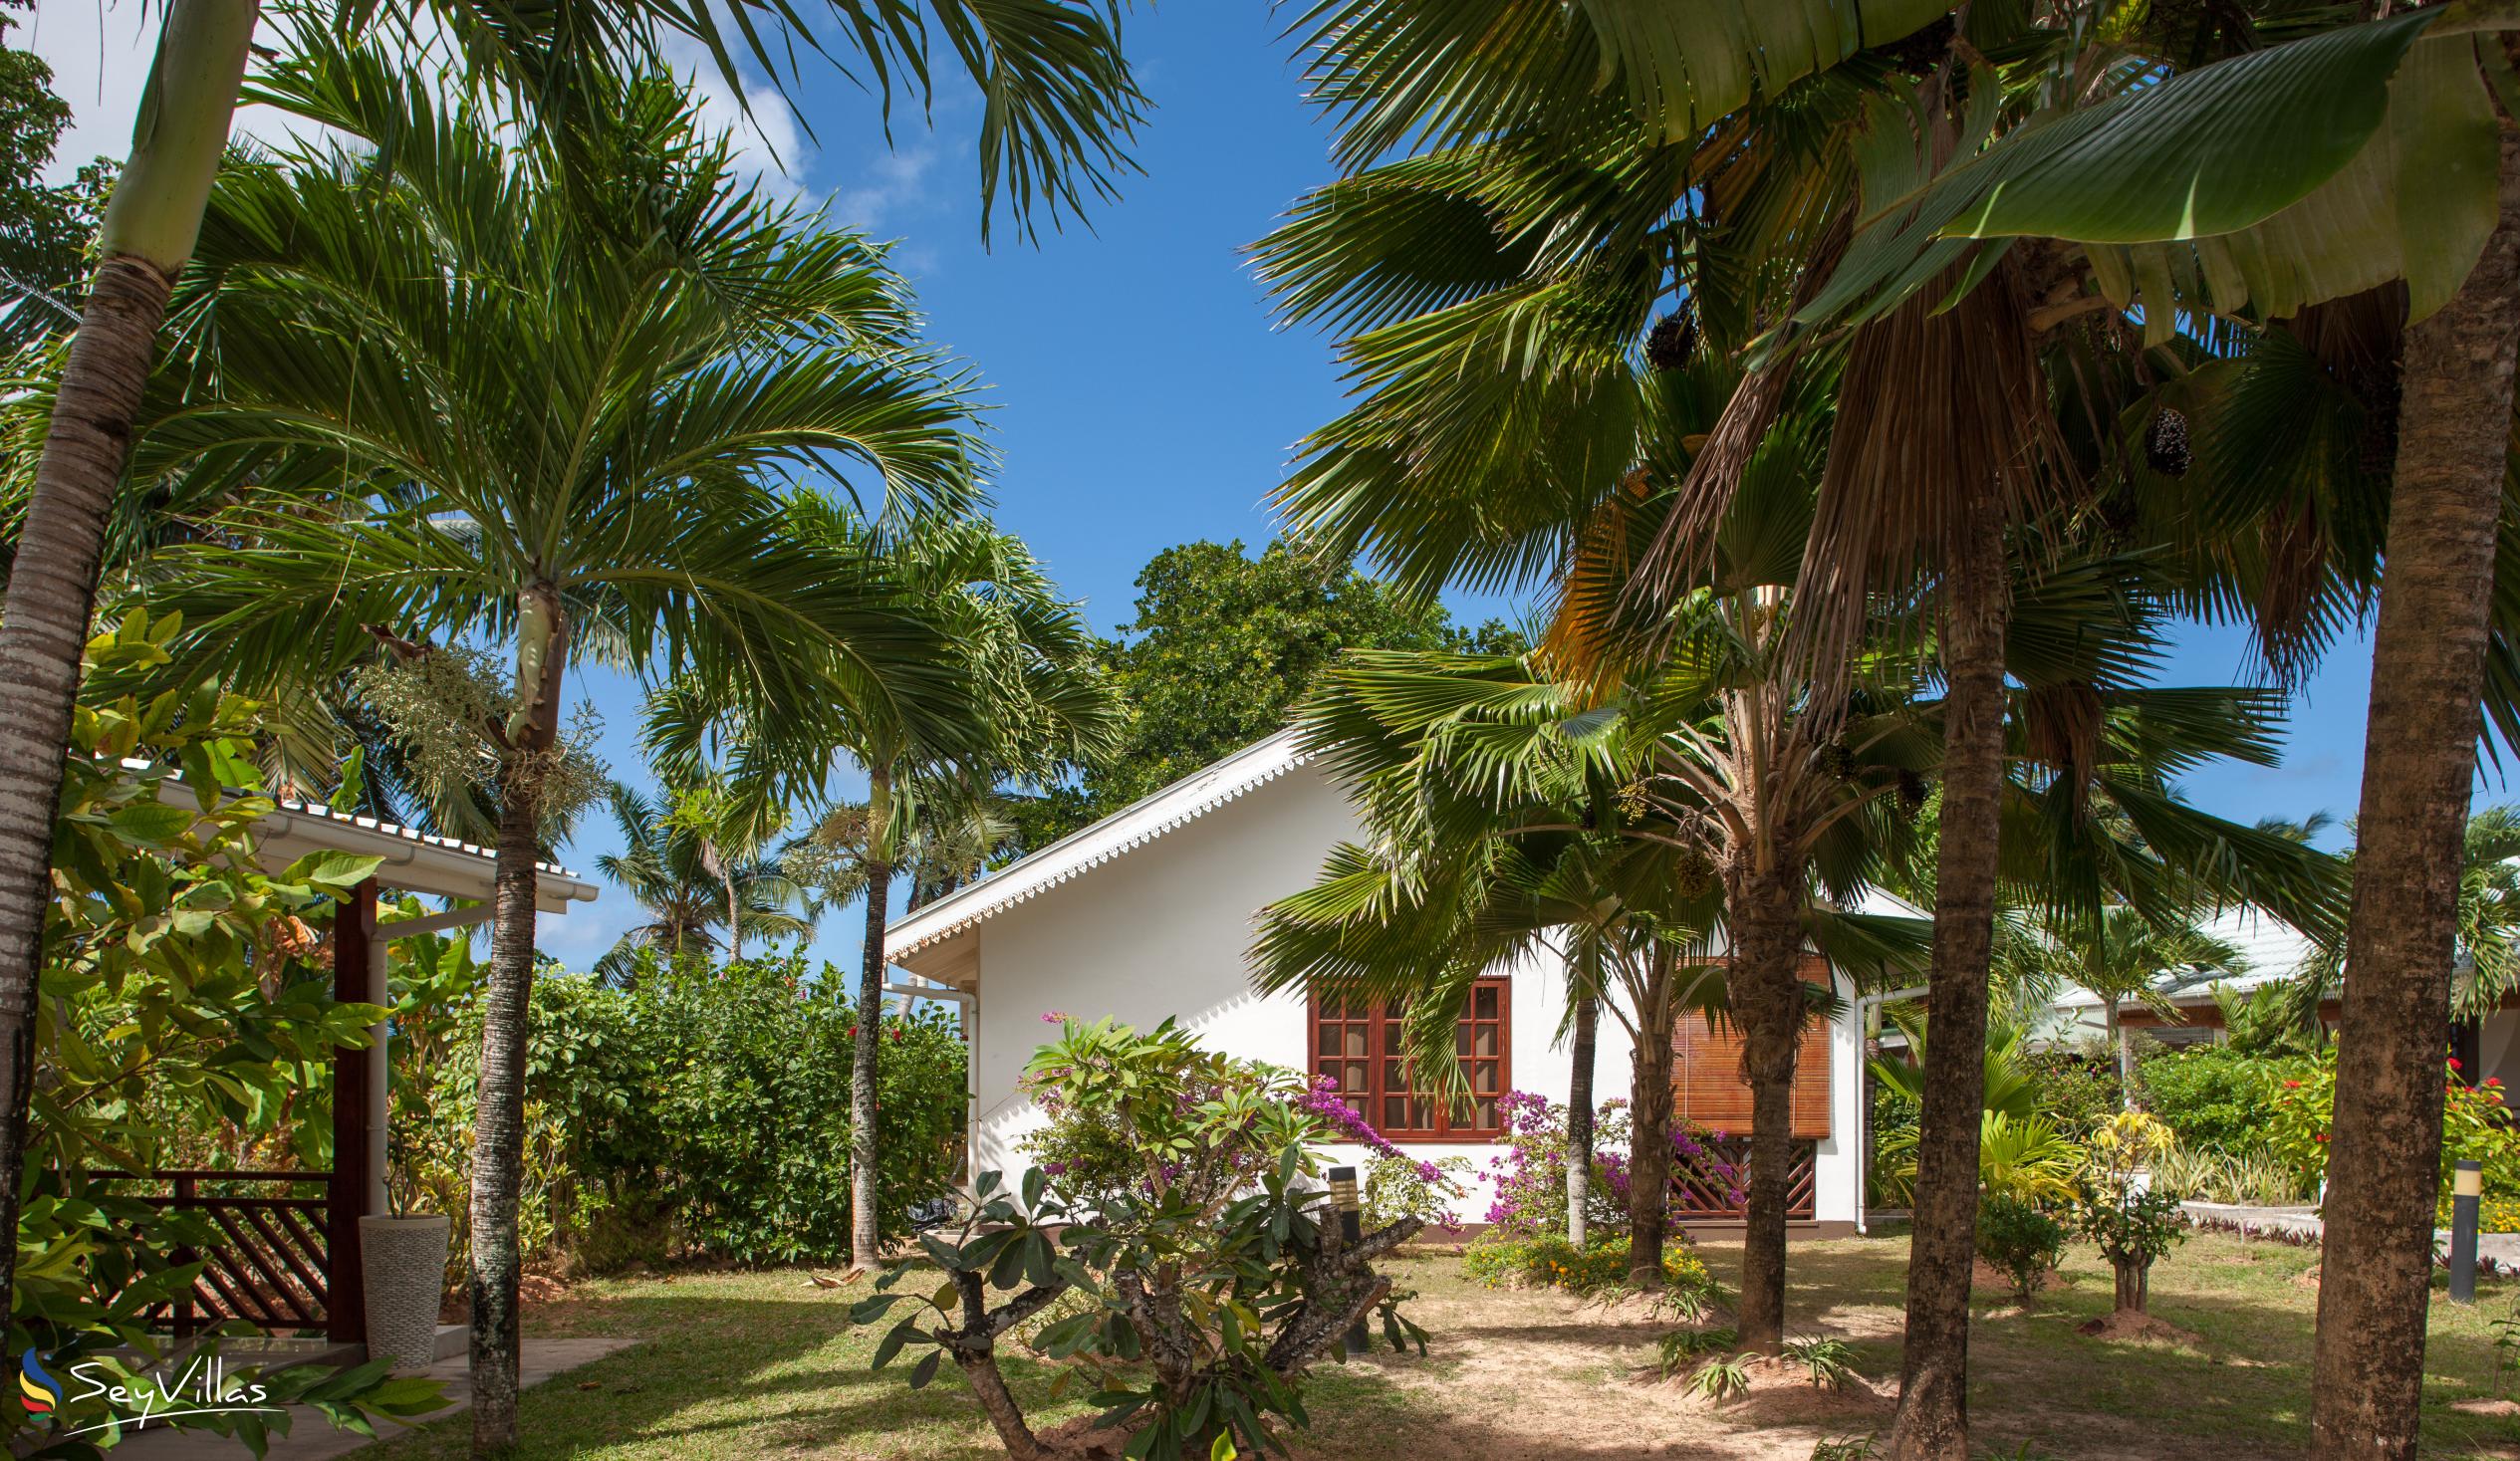 Foto 15: Villas de Mer - Aussenbereich - Praslin (Seychellen)